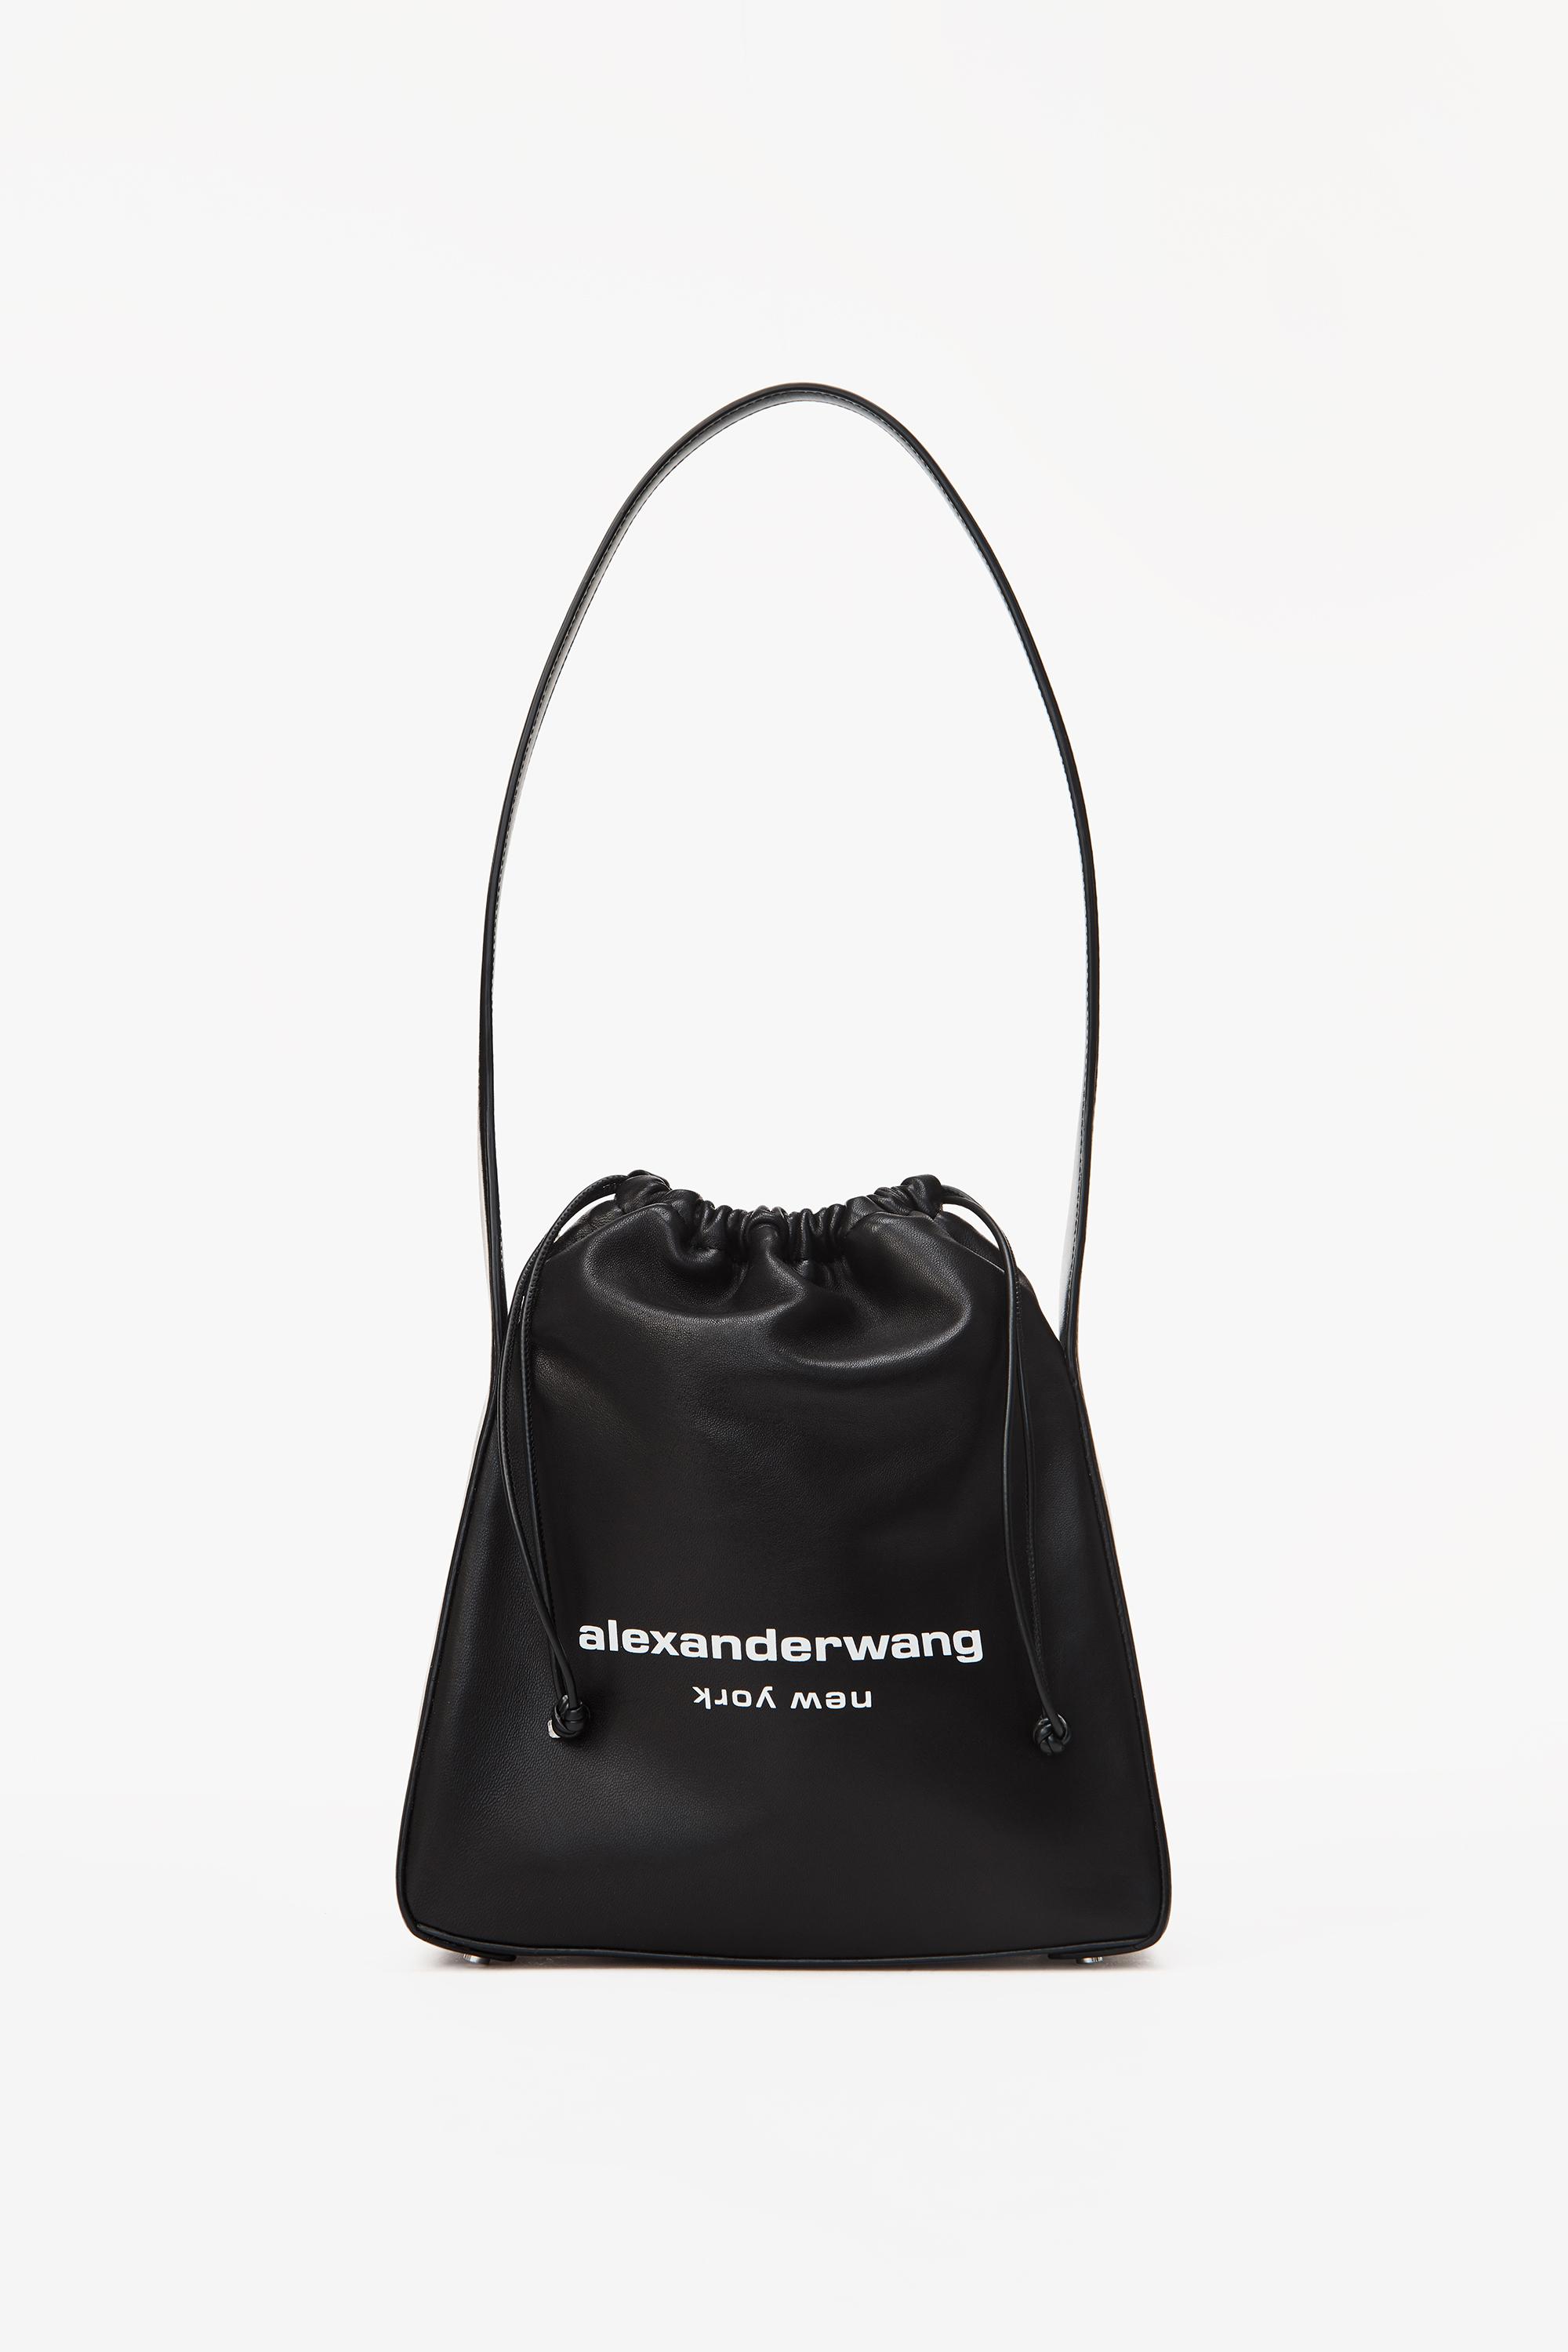 Alexander Wang Hobo Bag Flash Sales, UP TO 62% OFF | www.pcyredes.com